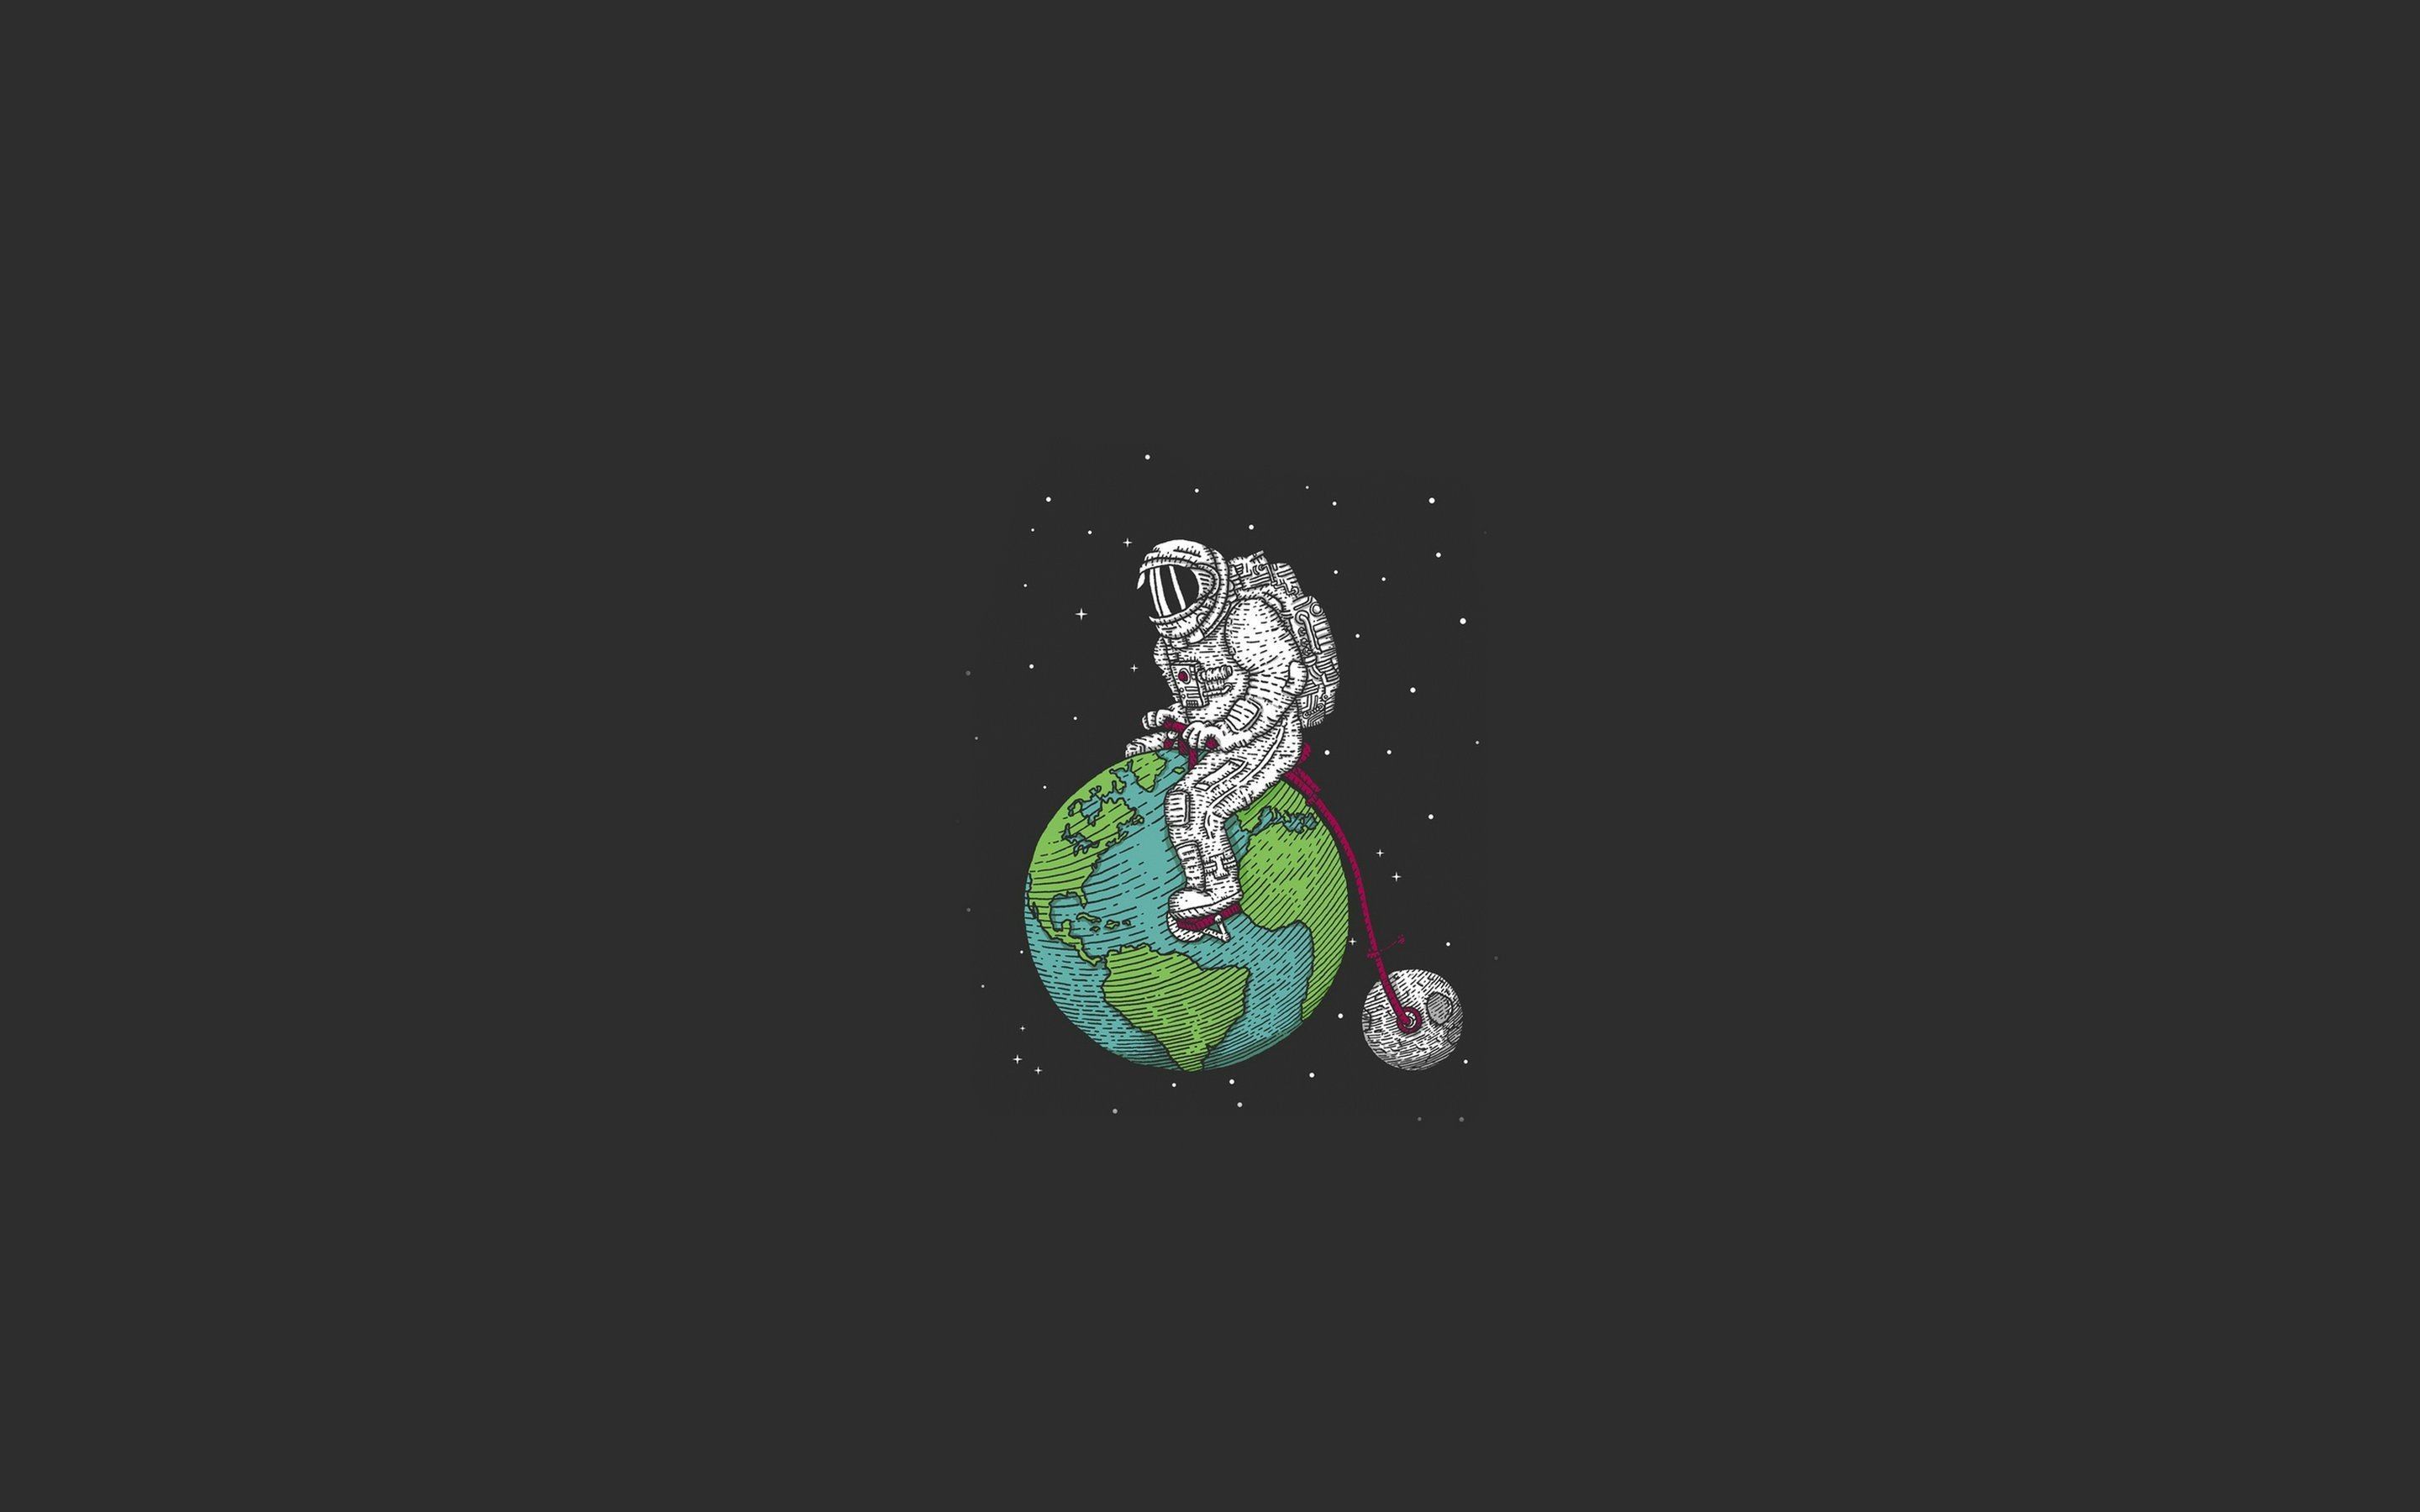 Astronaut on the earth hd wallpaper - Astronaut